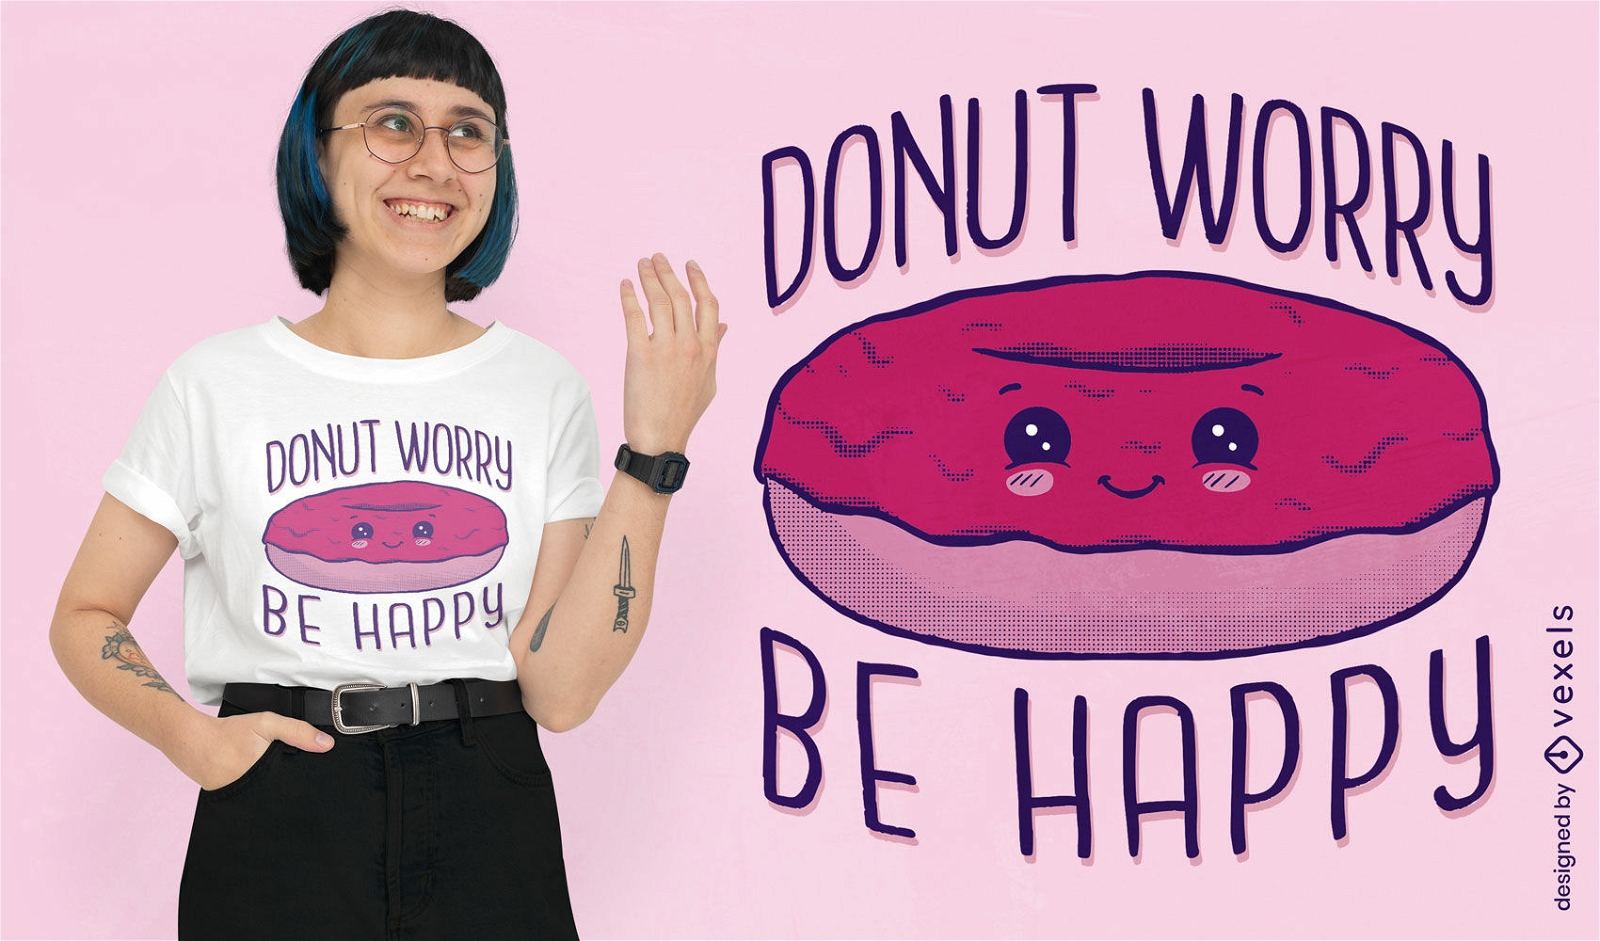 Cute donut food pun t-shirt design